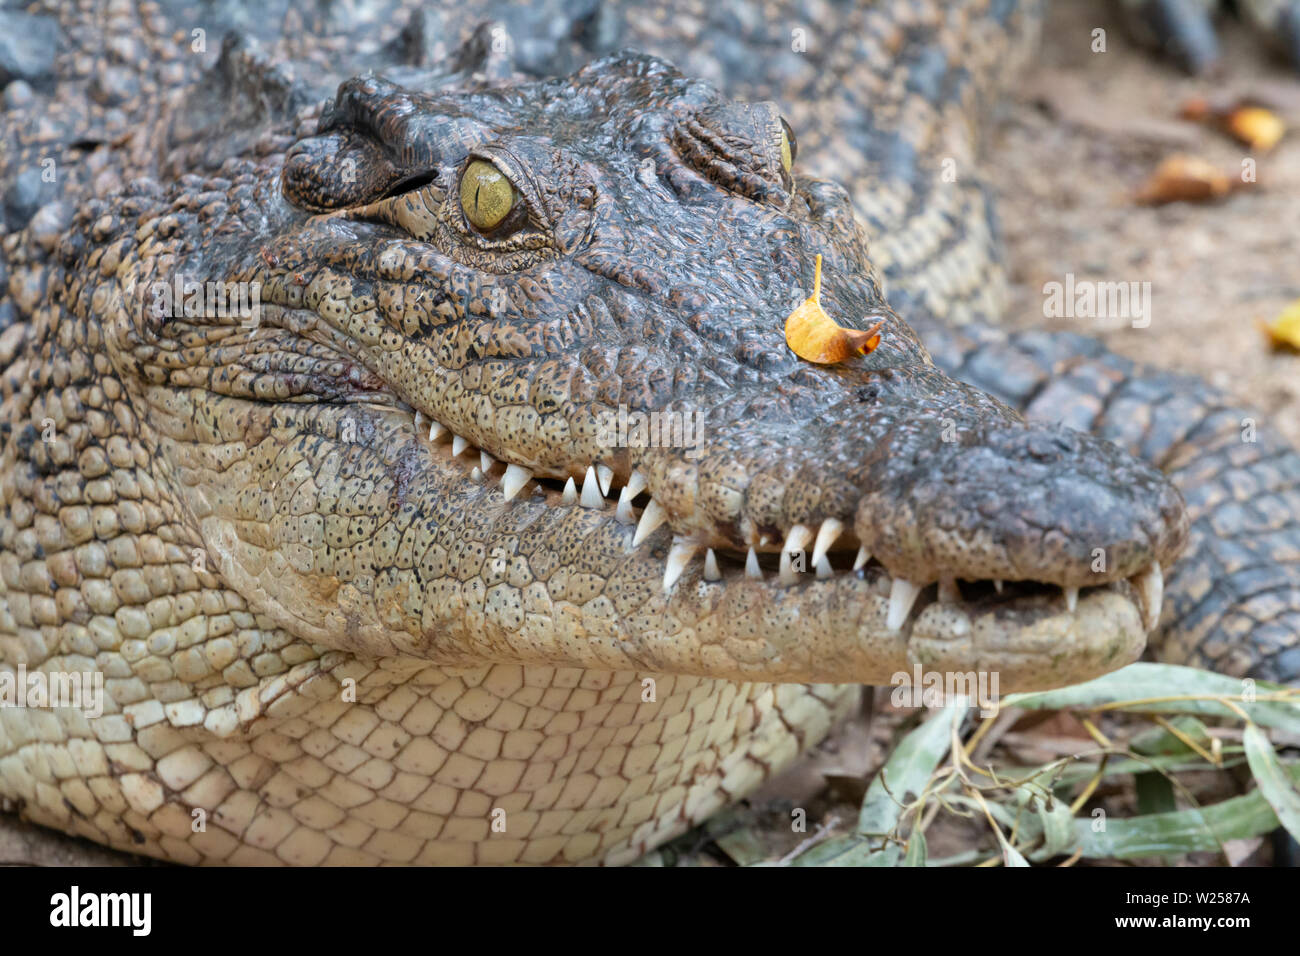 Saltwater Crocodile June 7th, 2019 Port Douglas, Australia Stock Photo